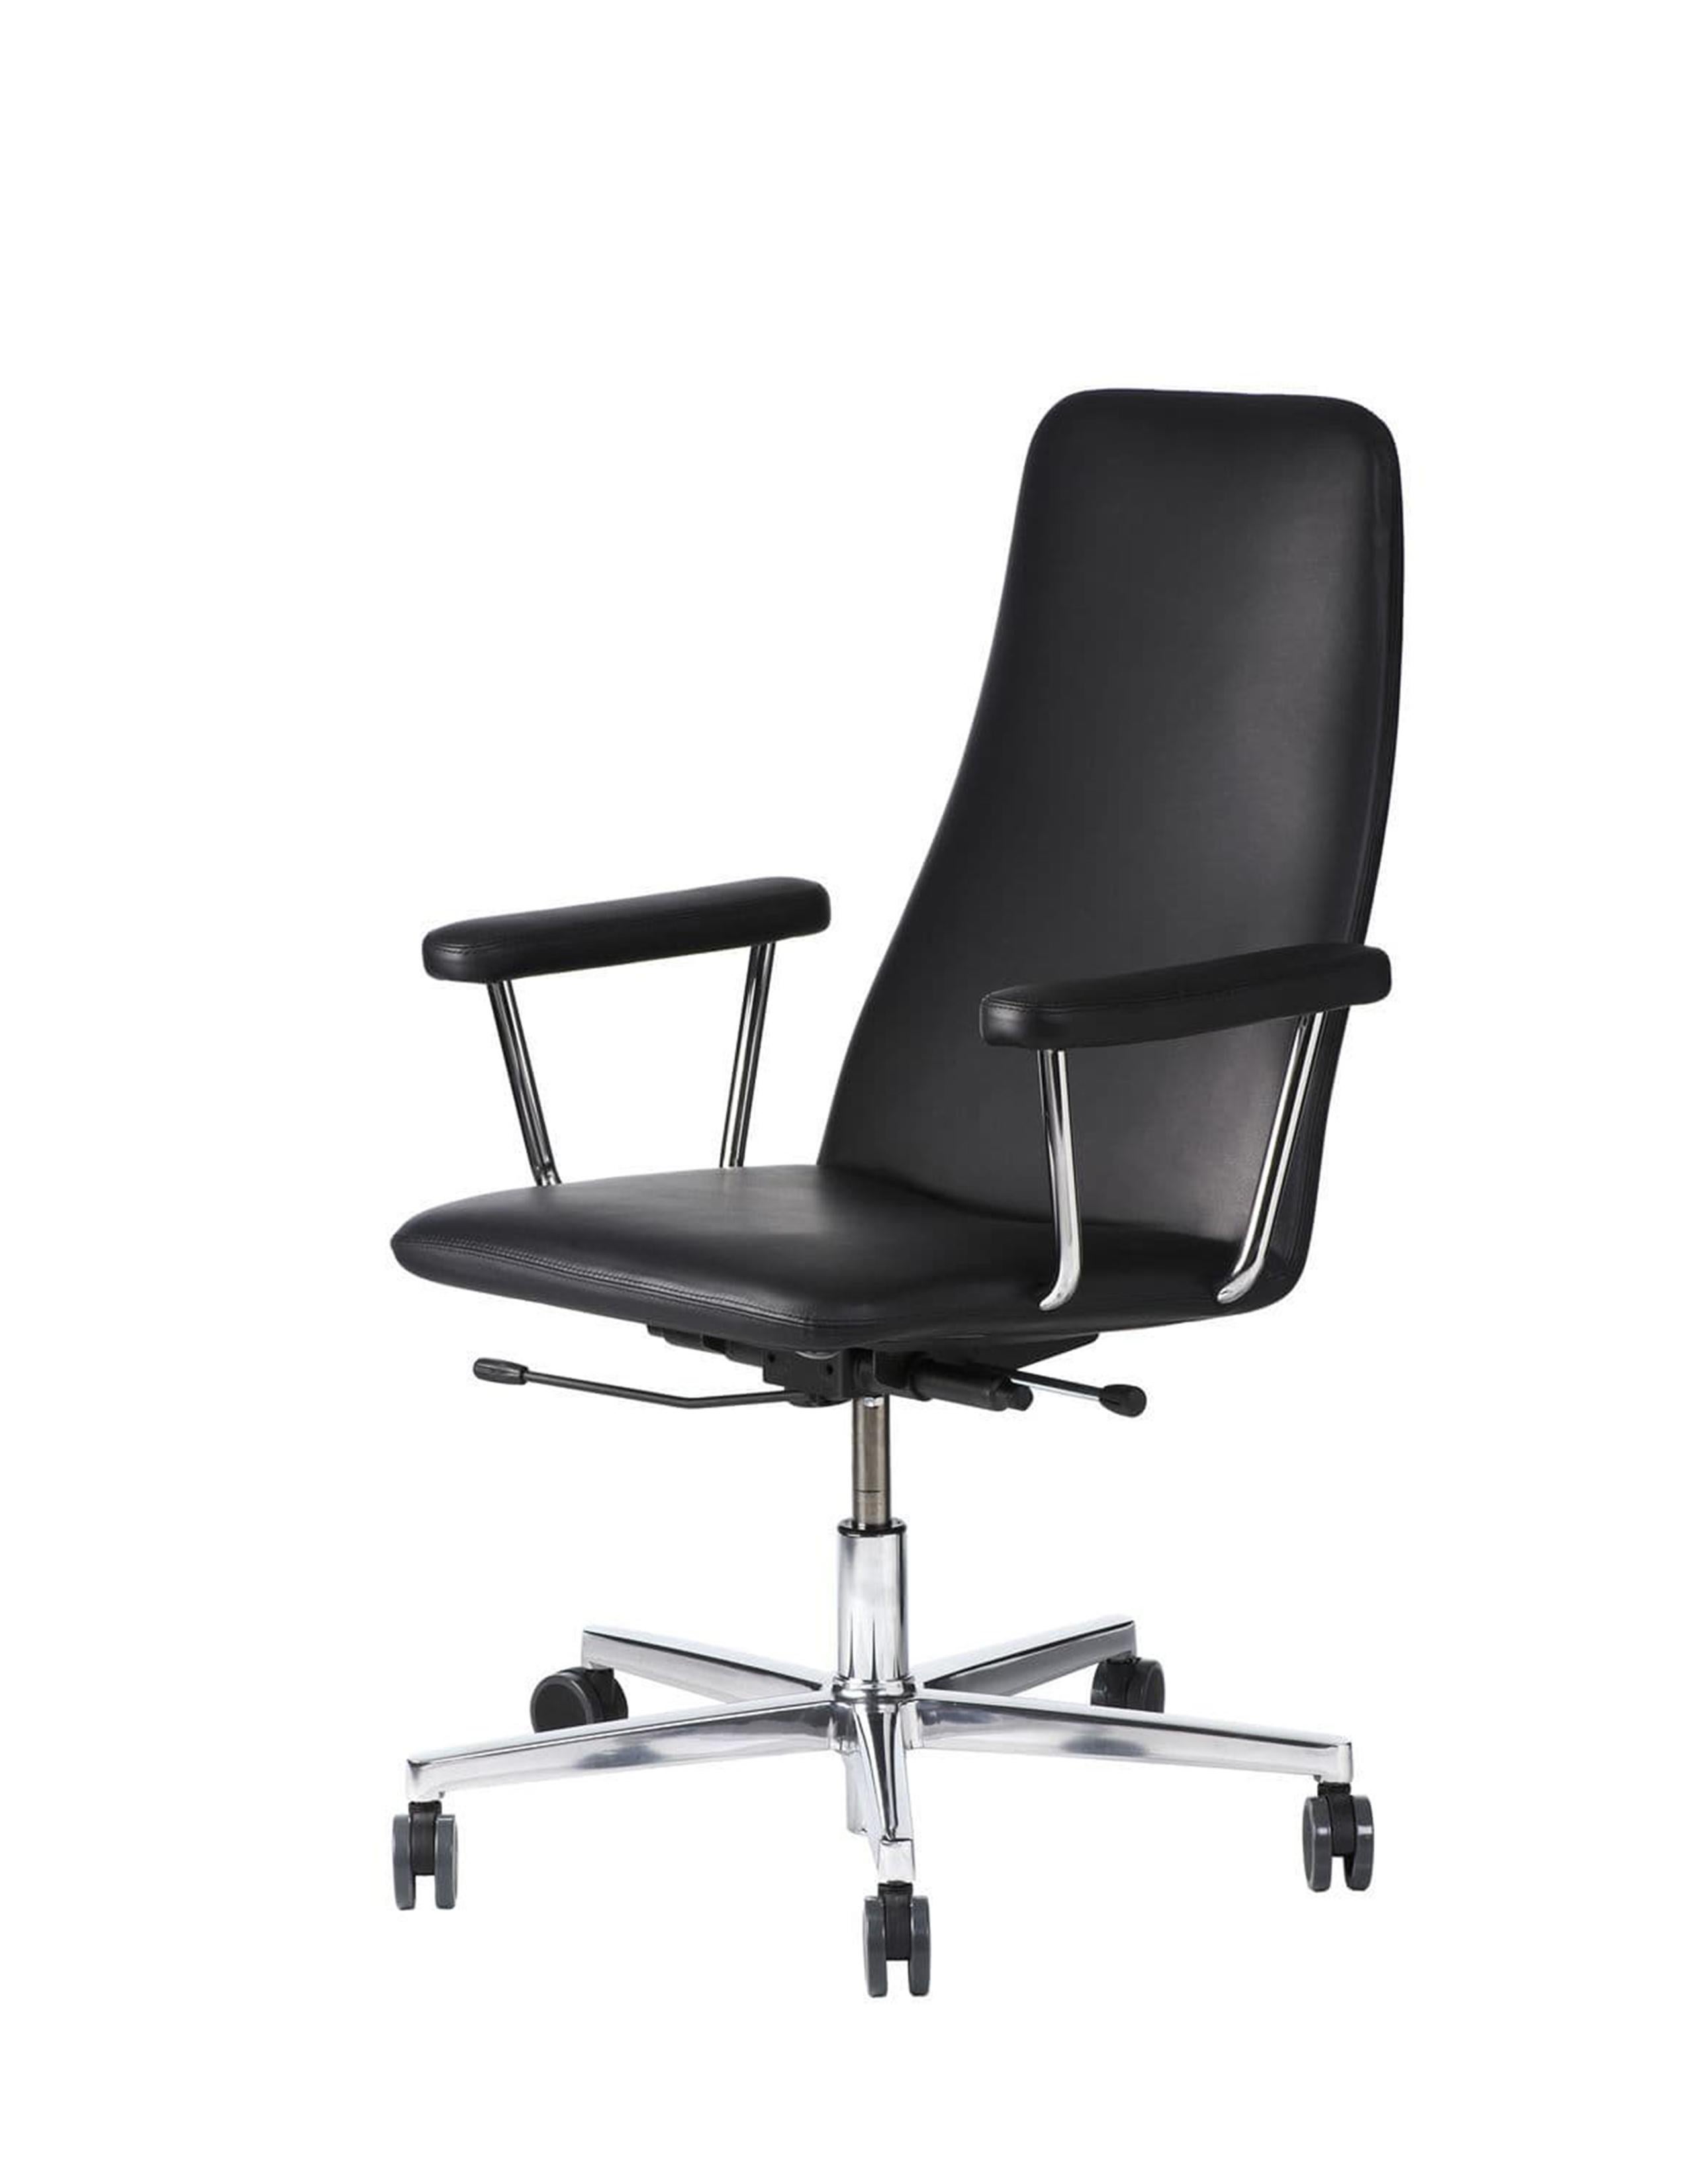 Johanson #BELLA office chair
24.41